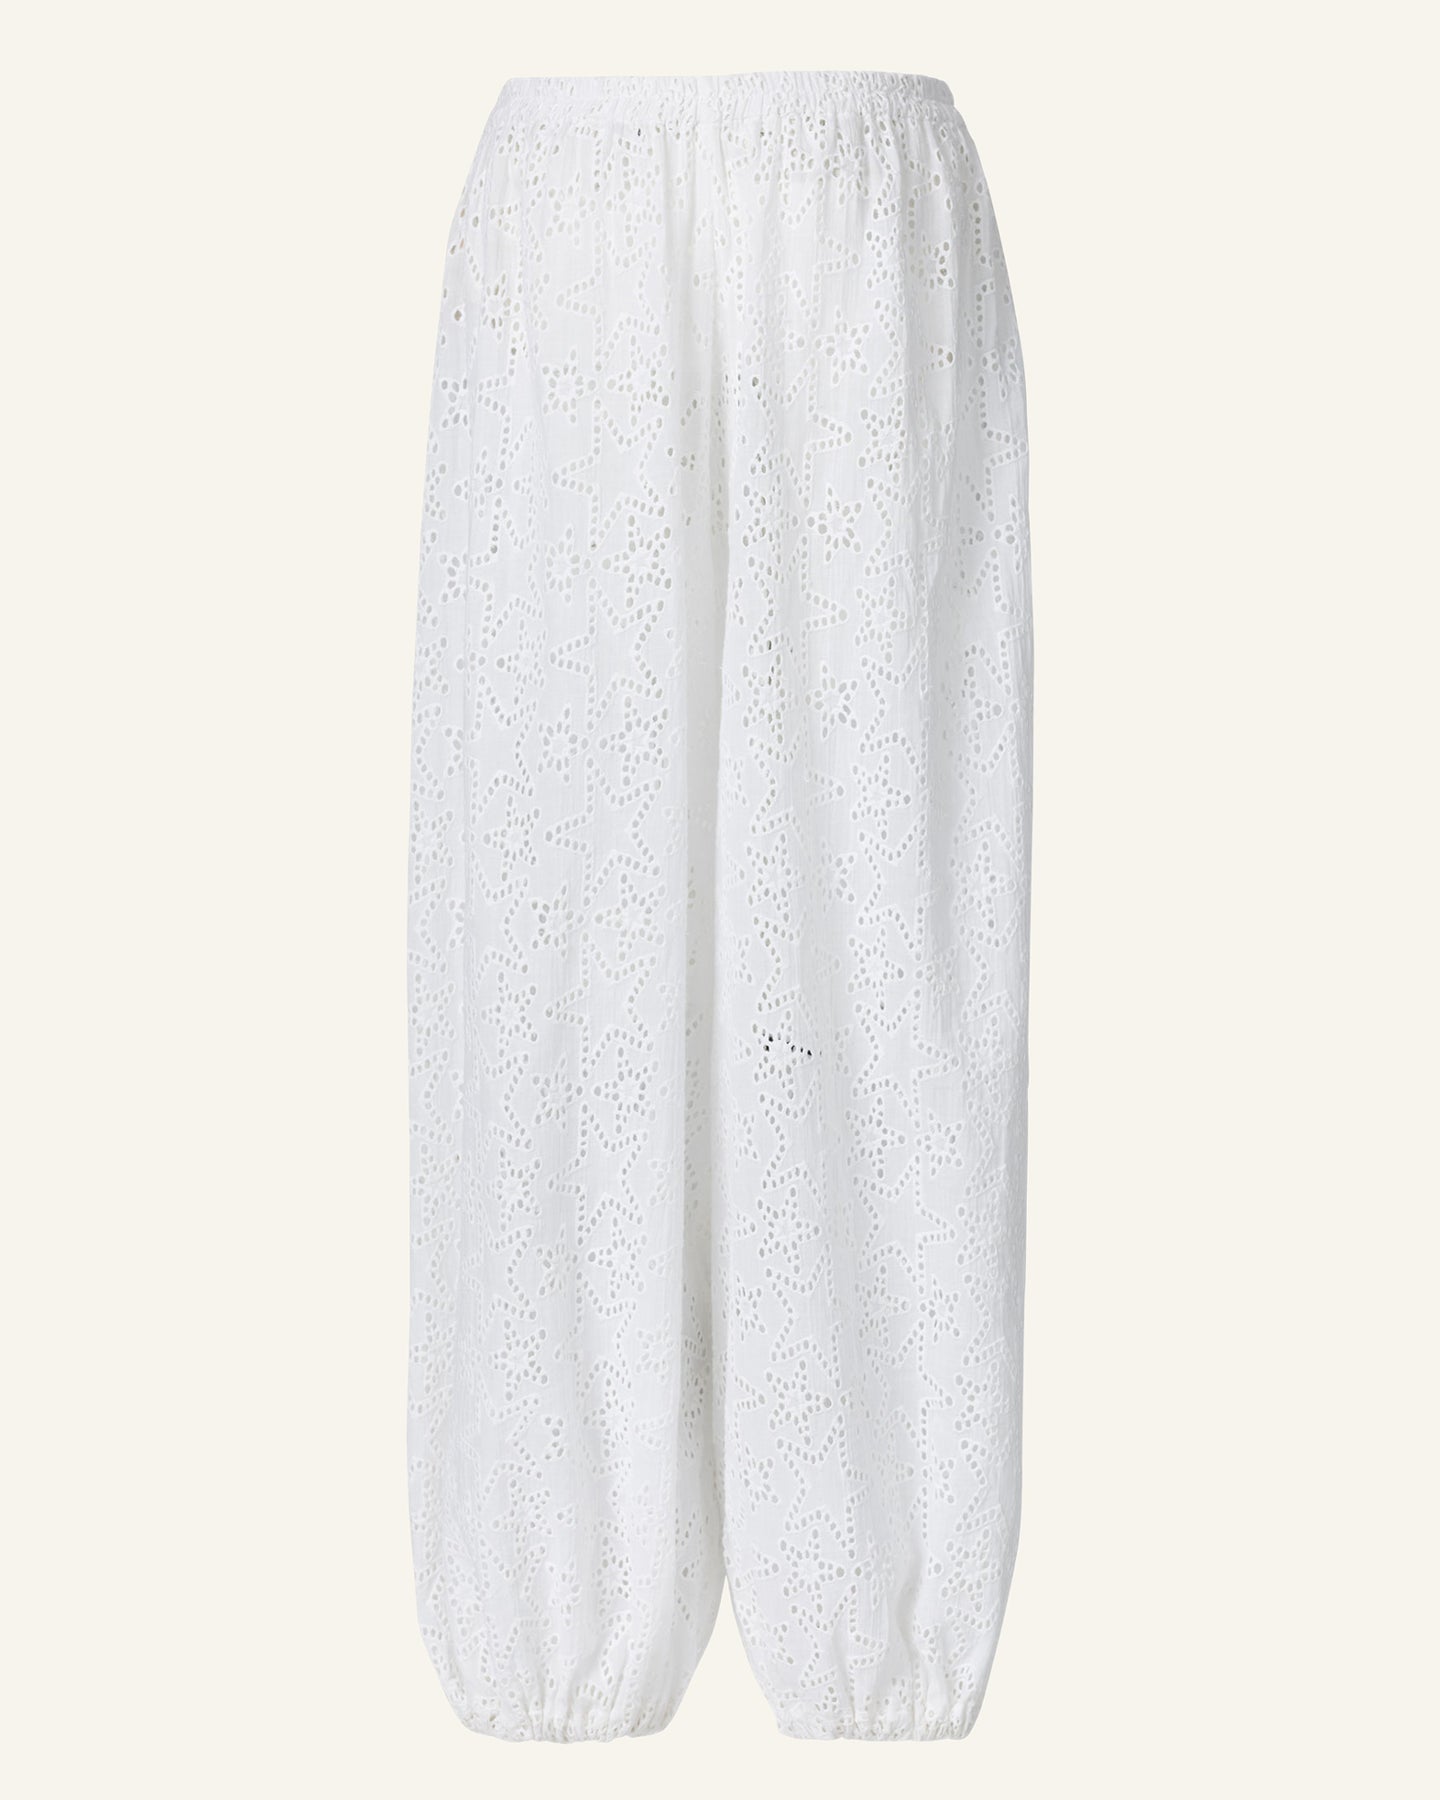 White plain cotton palazzo pants